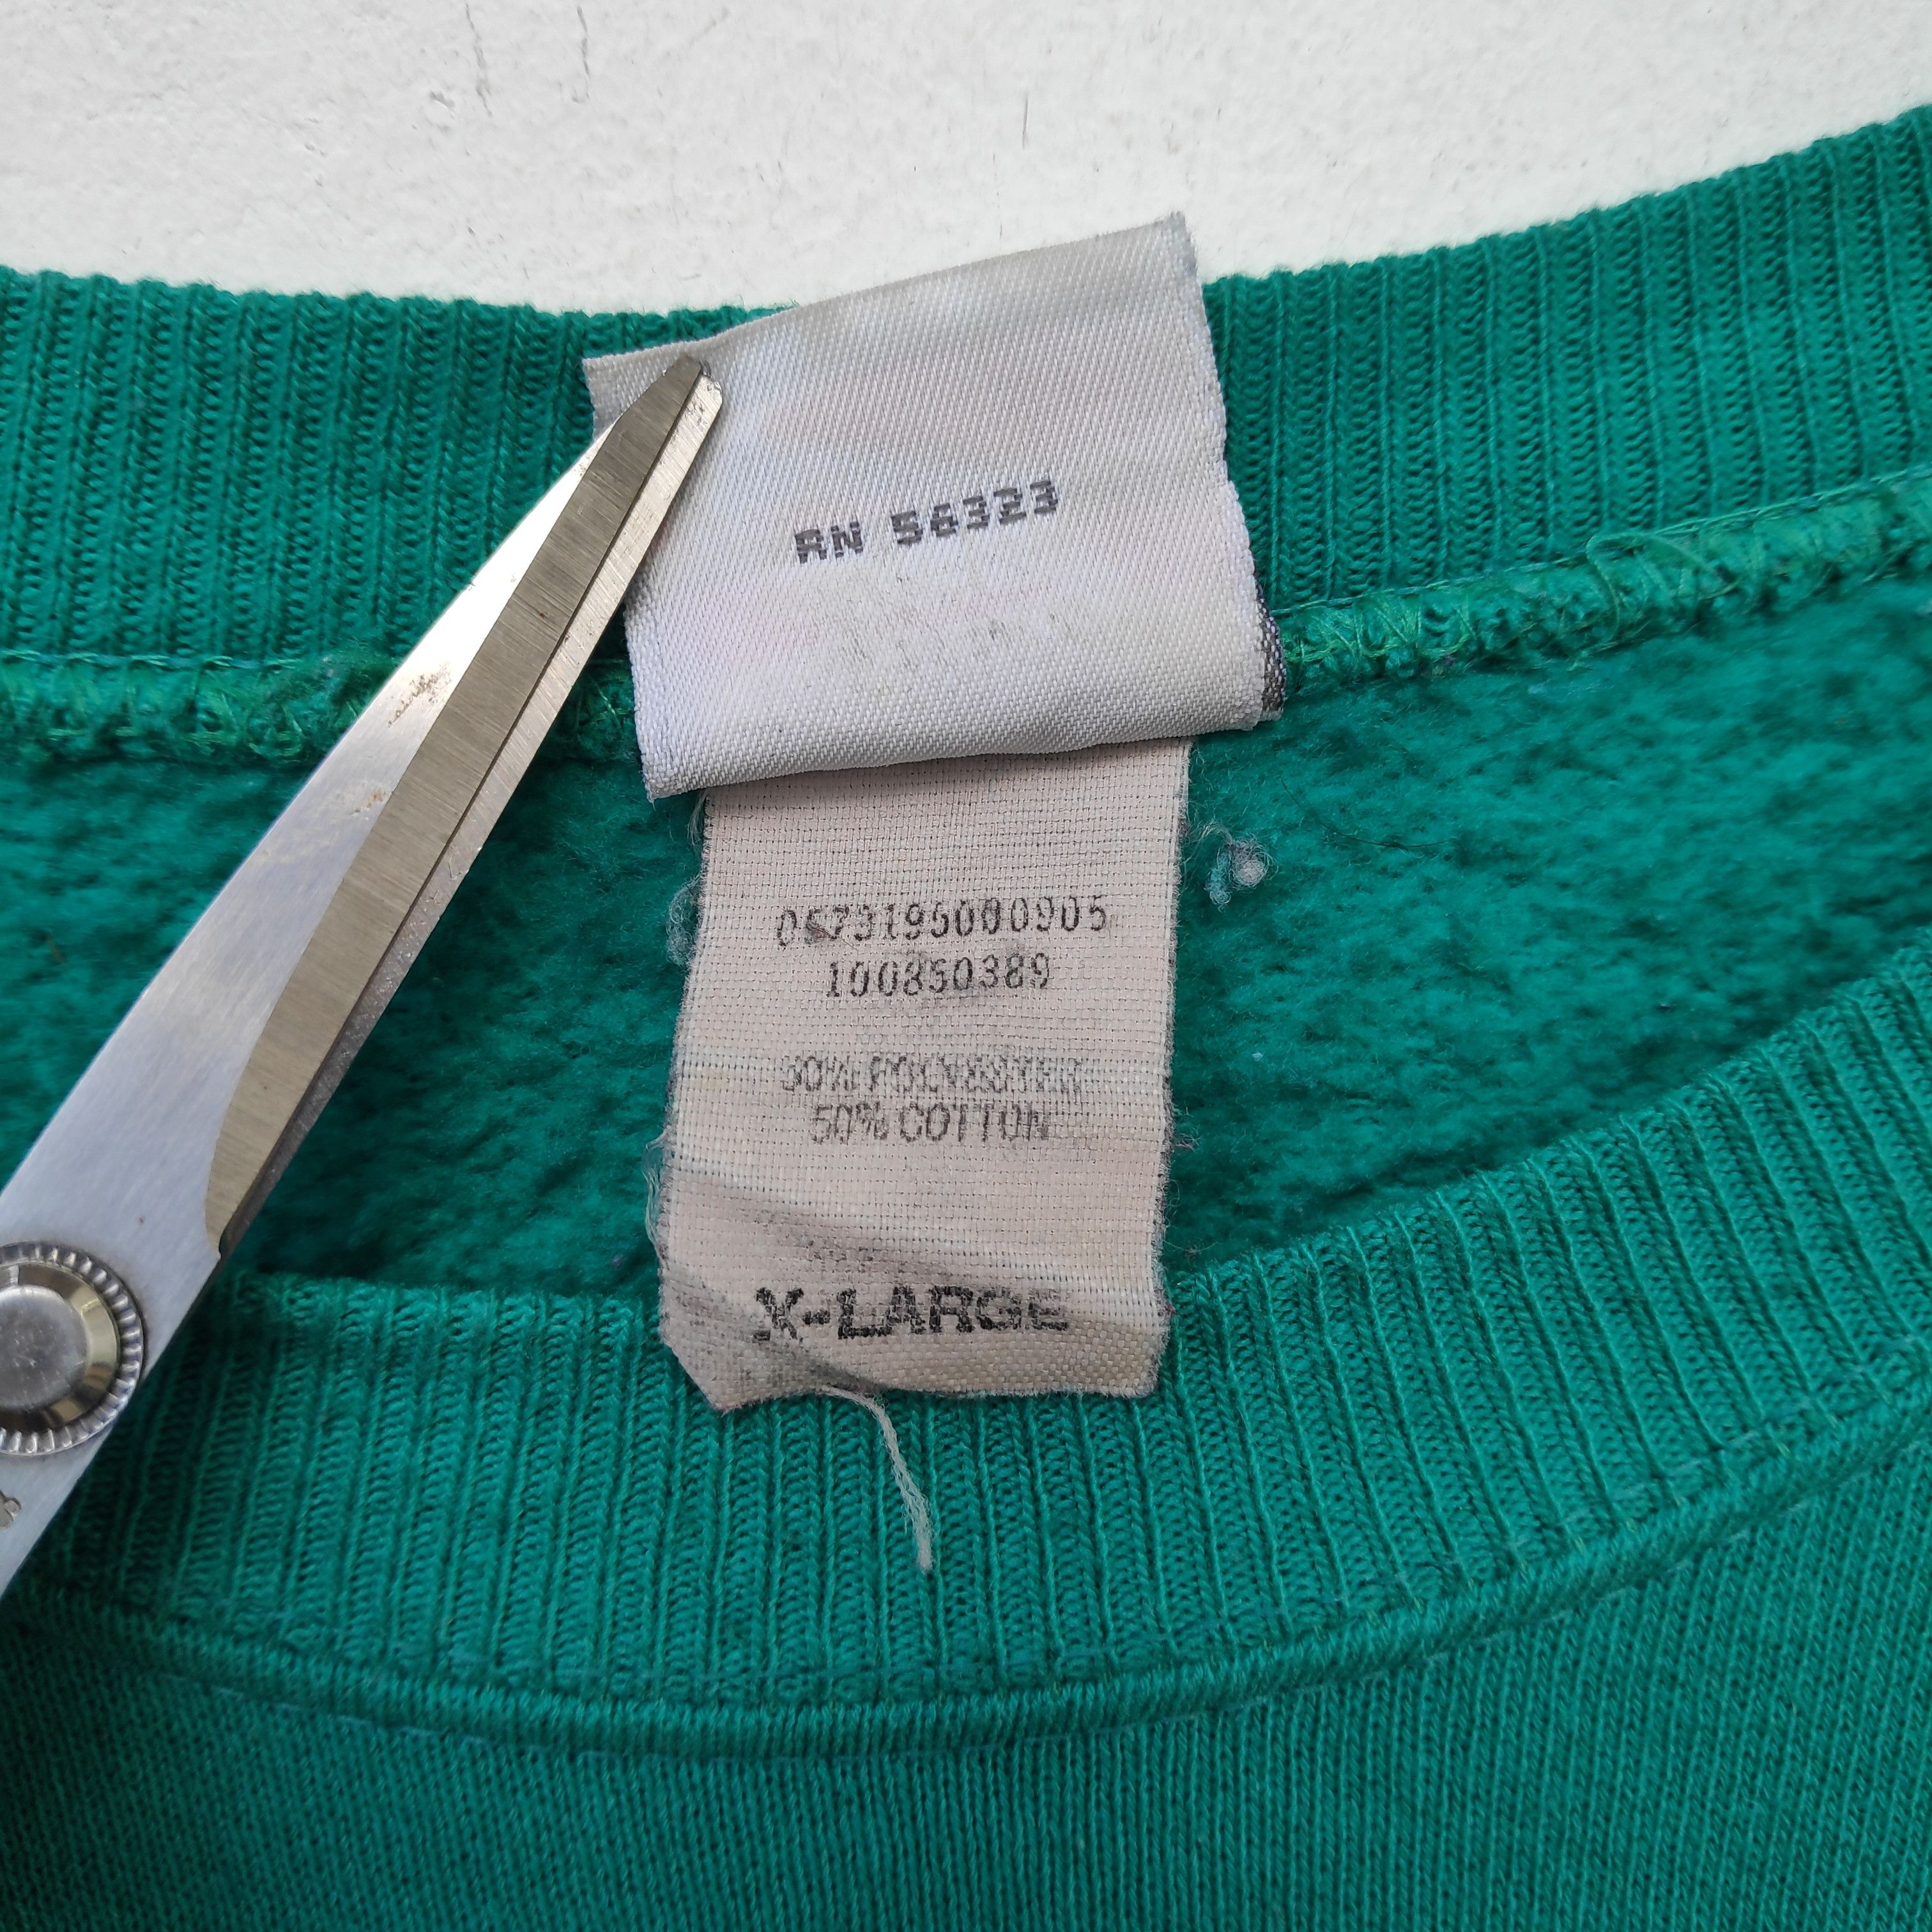 Nike Vintage Nike Sweatshirt Large Green Dope 90s Streetwear Size US L / EU 52-54 / 3 - 4 Thumbnail